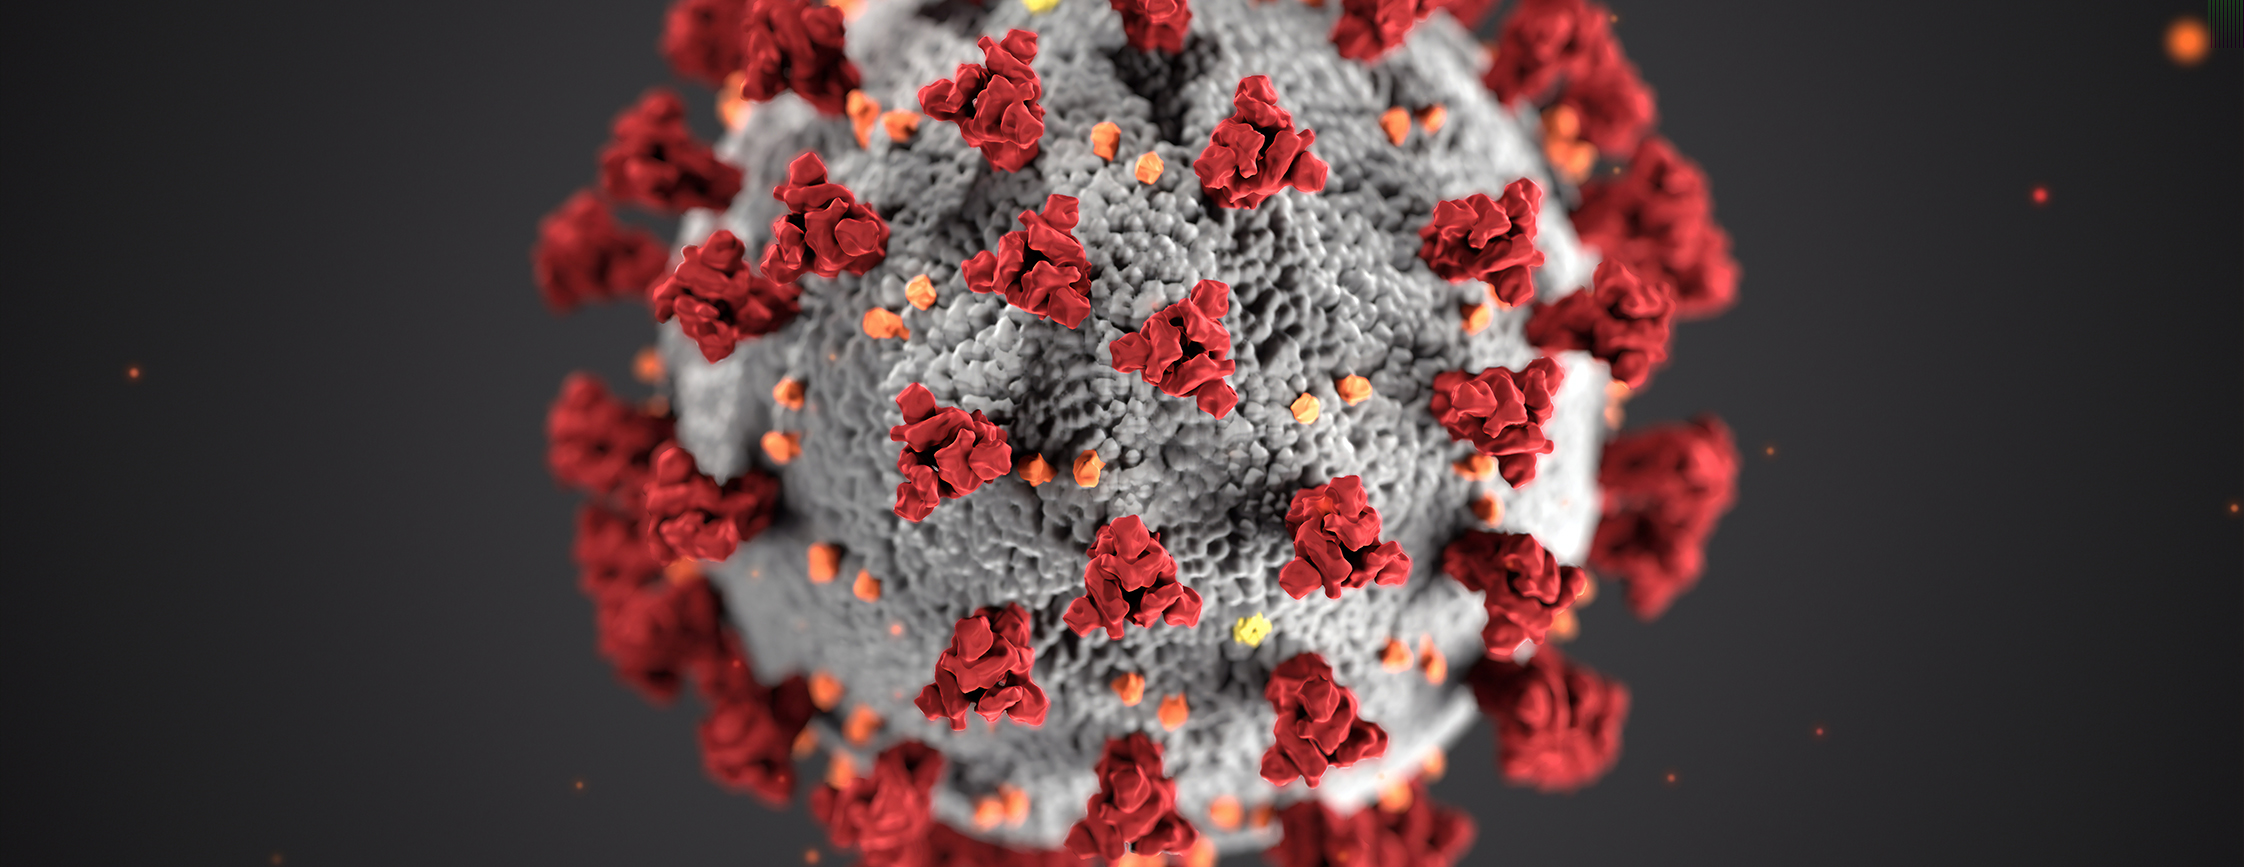 Bild das Corona Virus zeigt